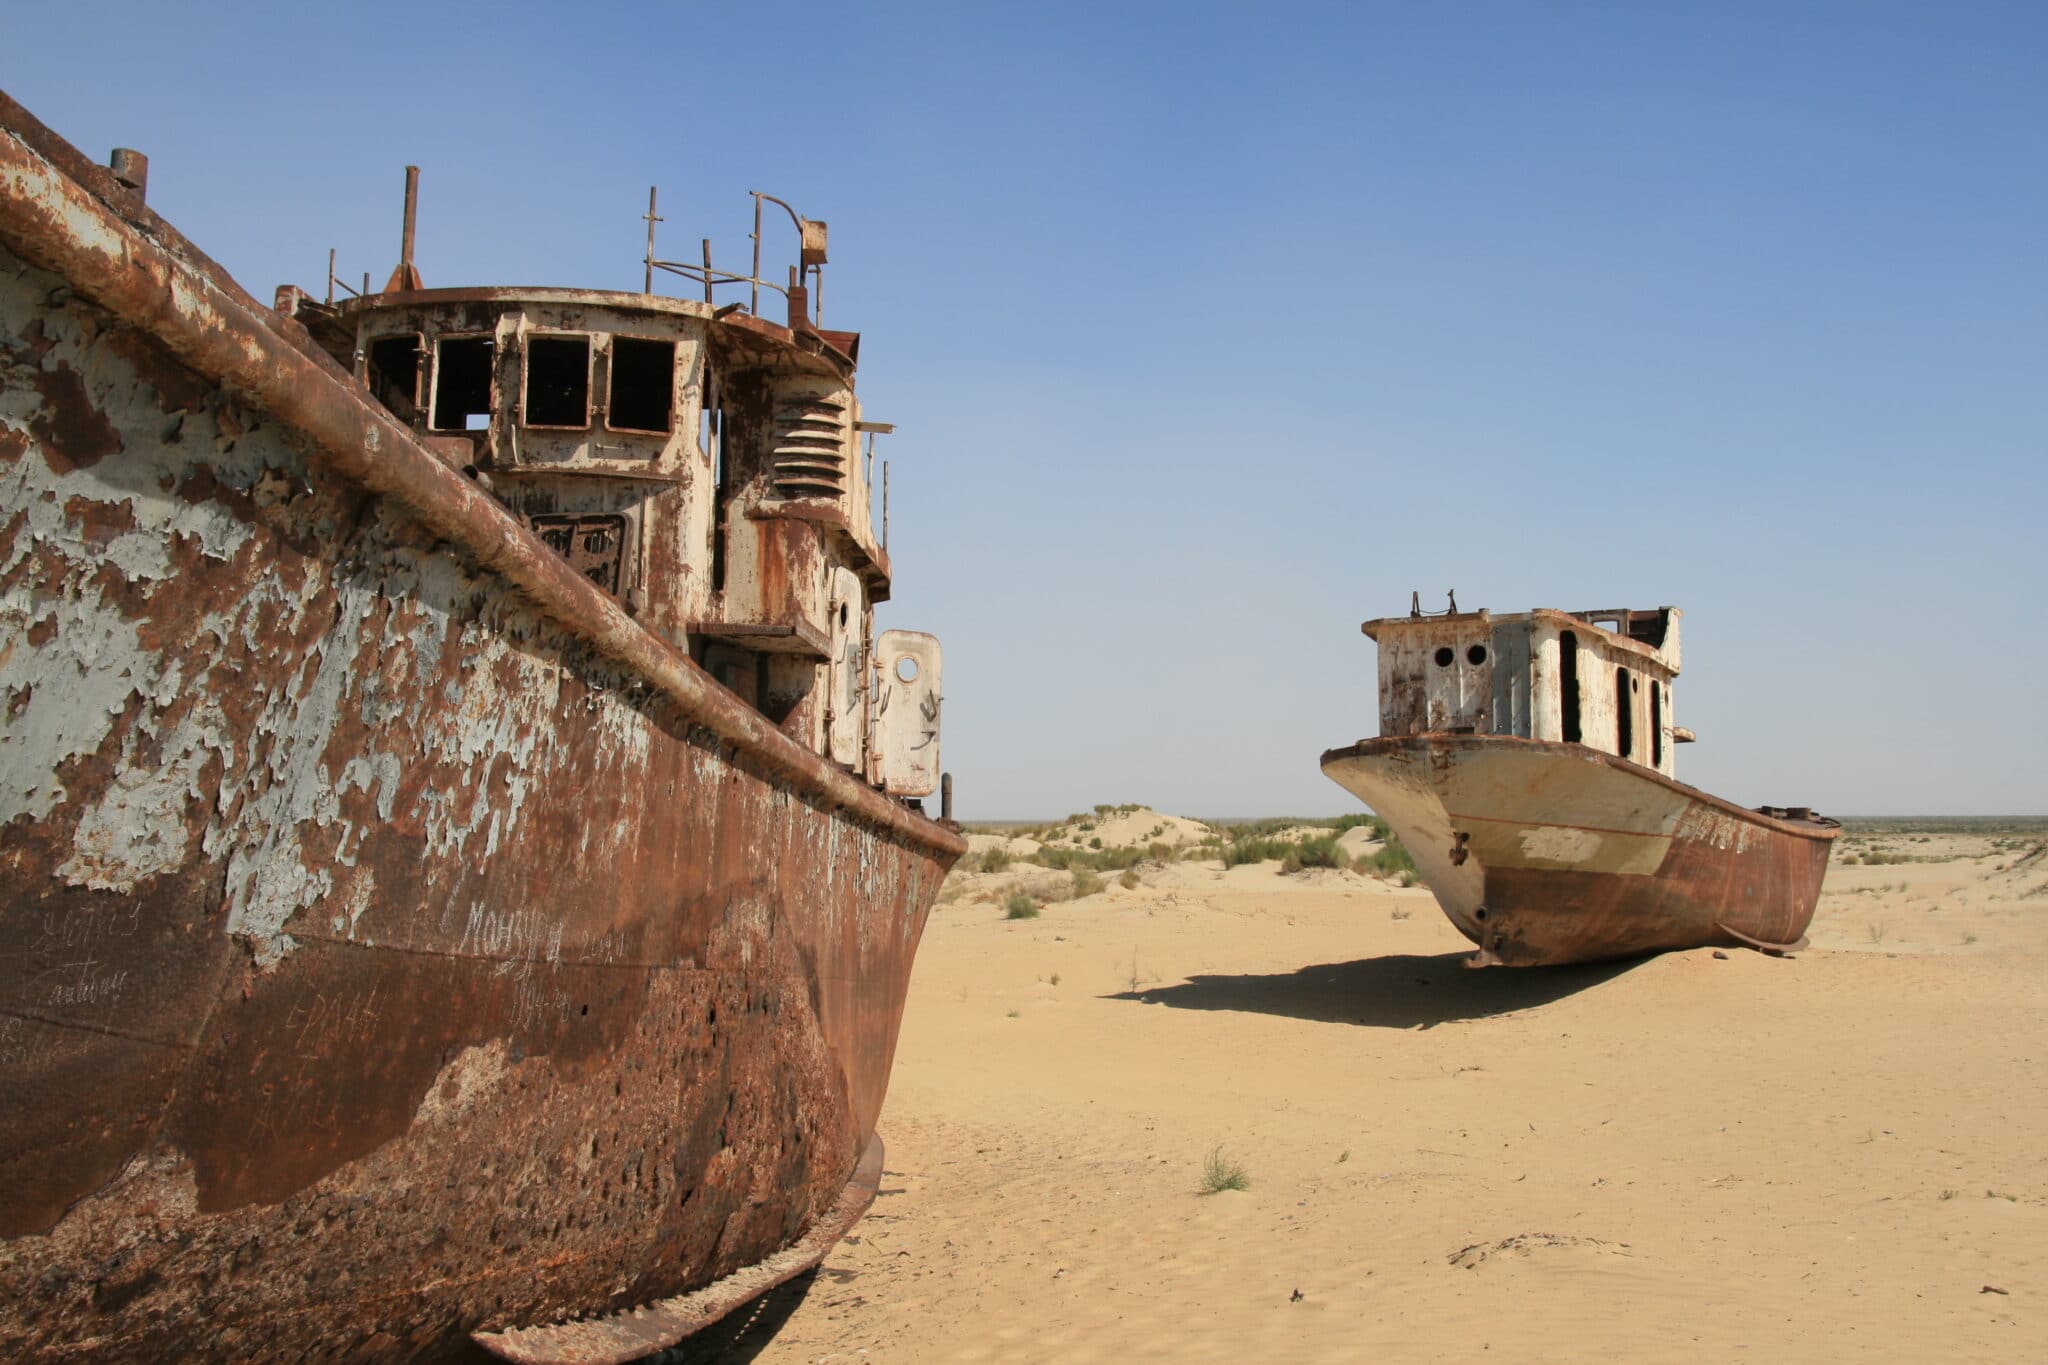 Abandoned boats on the Aral Sea near Moynaq in Uzbekistan